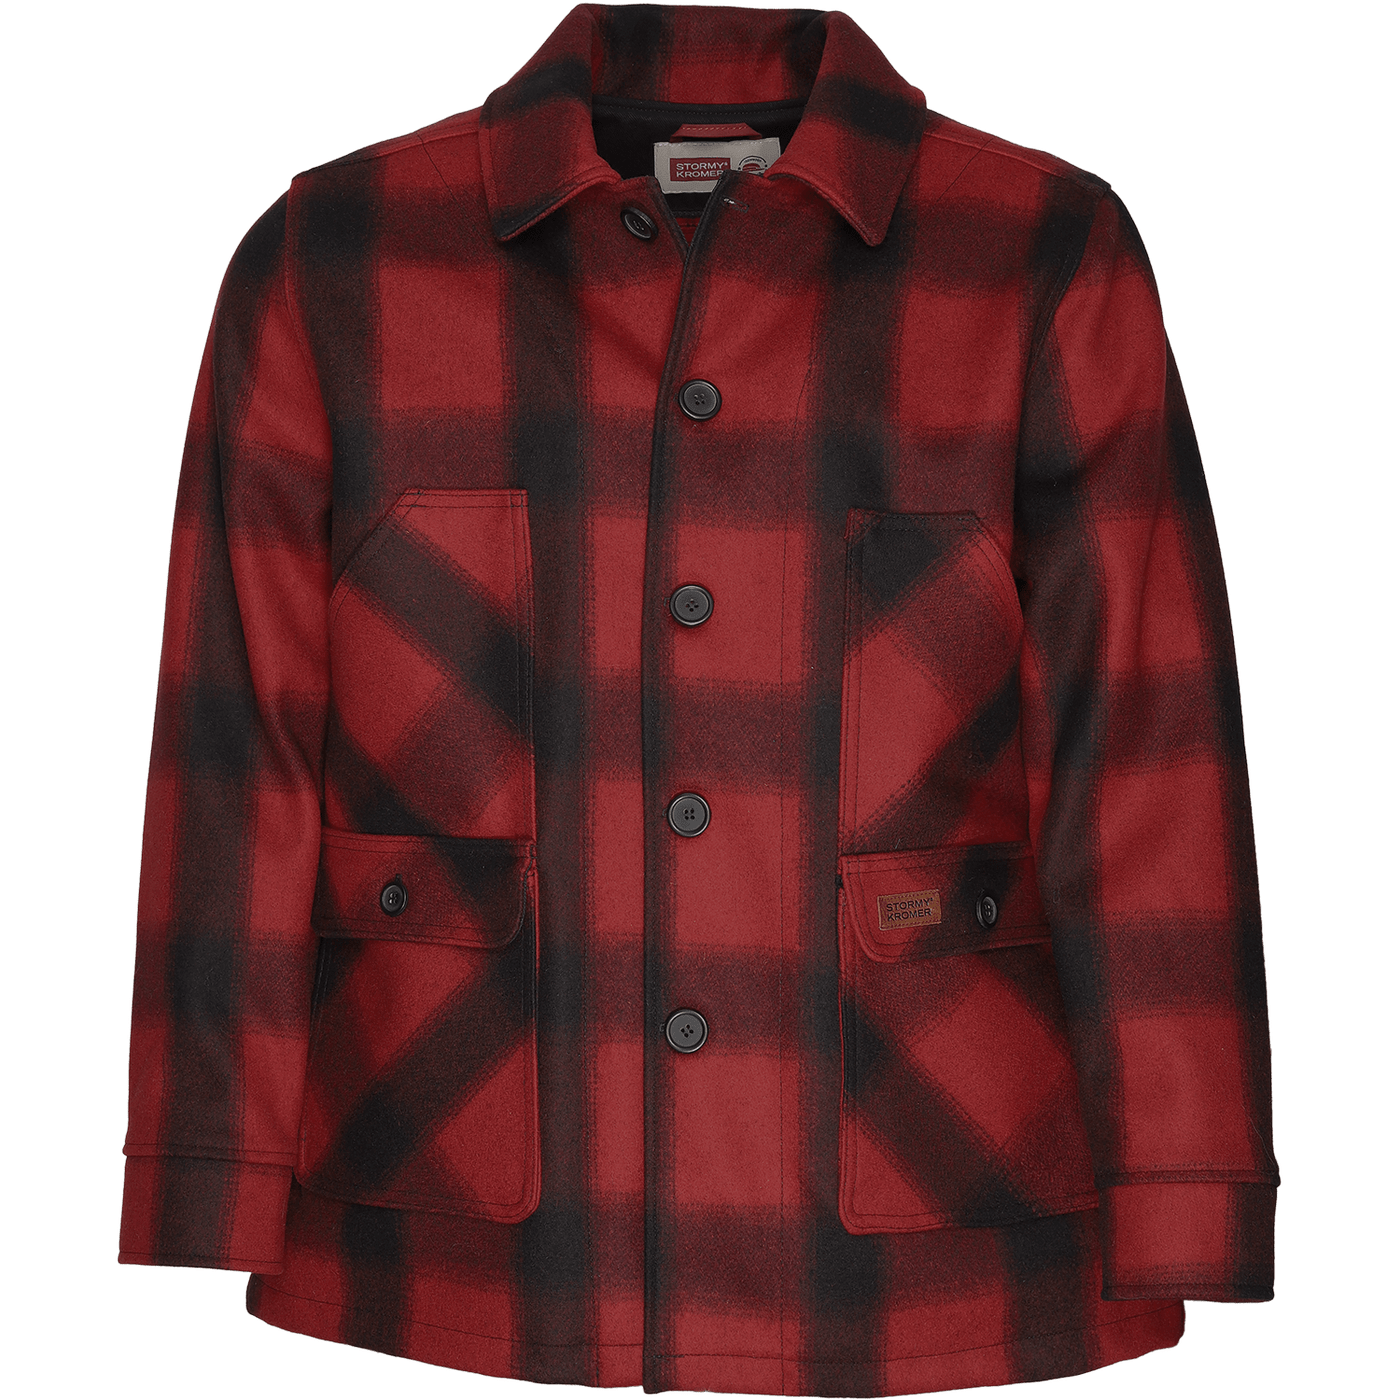 The Mackinaw Hunting Coat | Stormy Kromer®